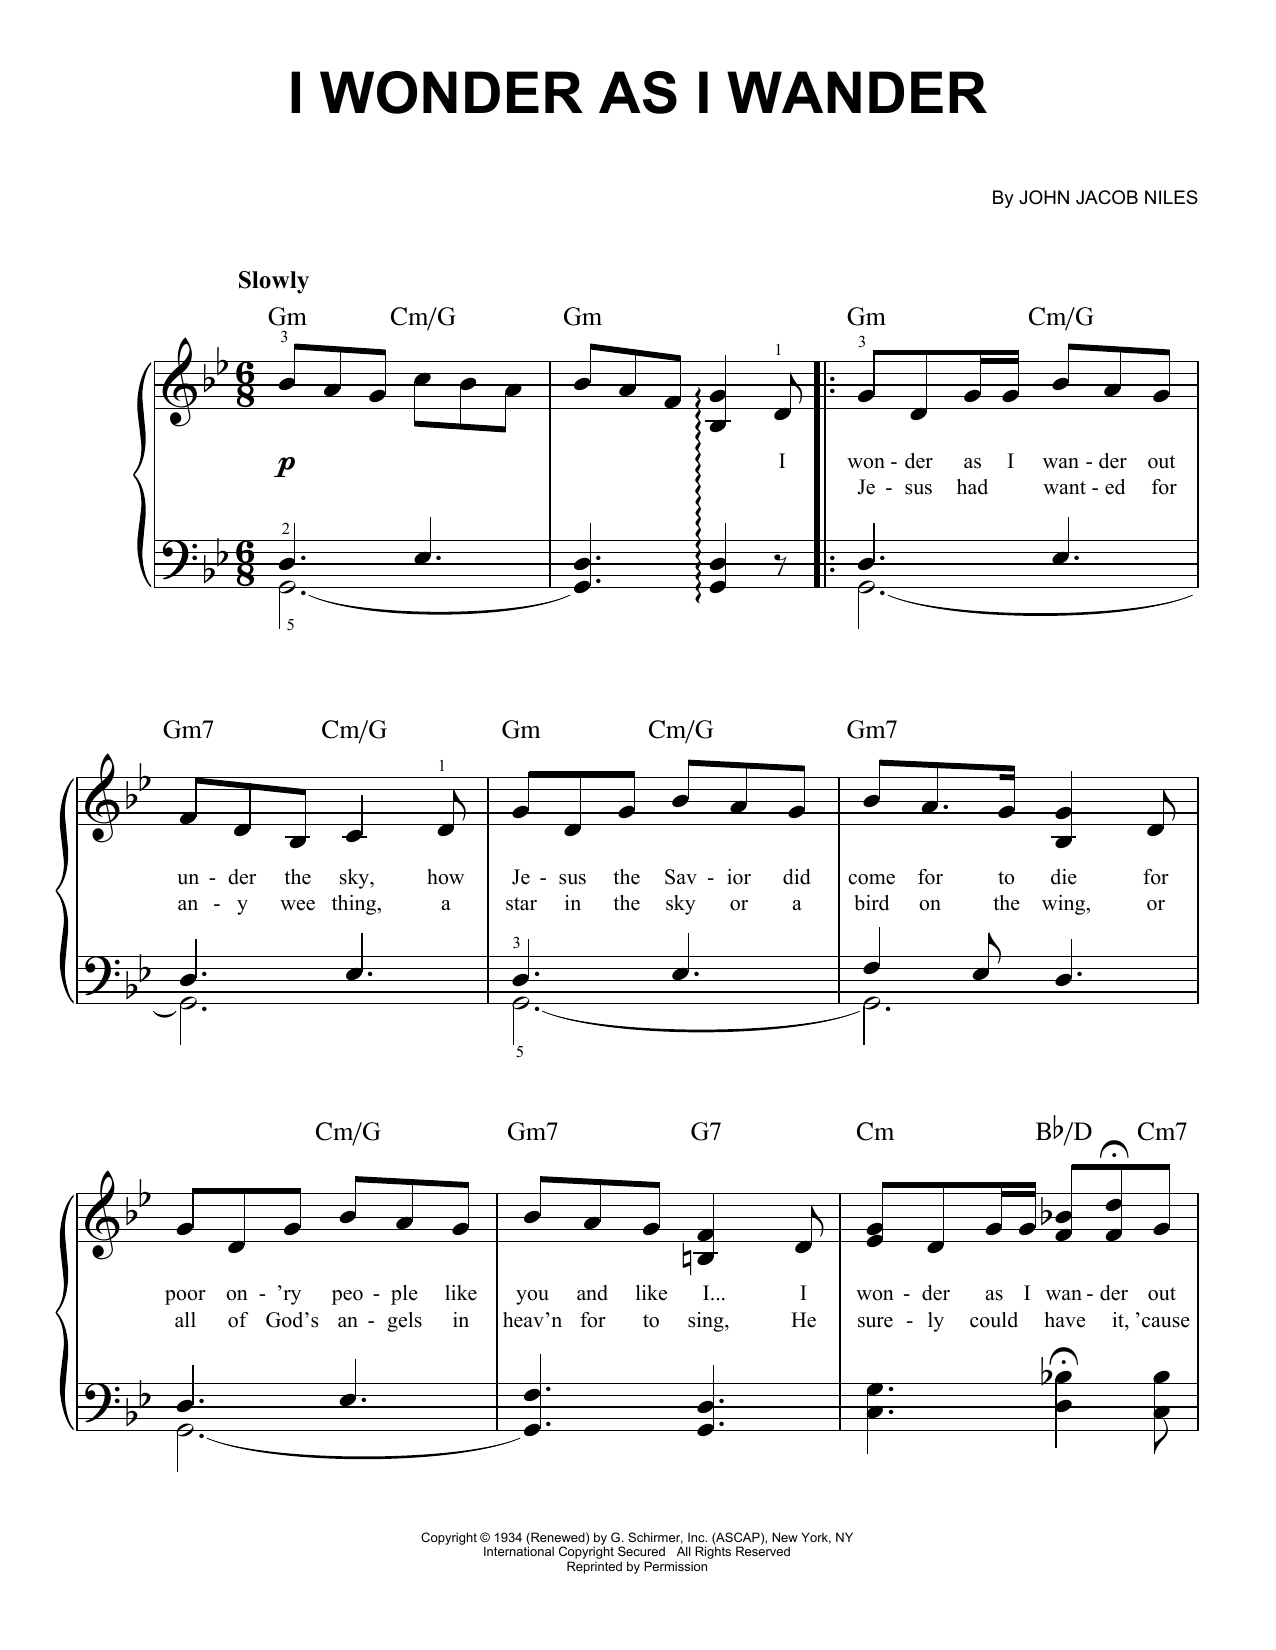 John Jacob Niles I Wonder As I Wander Sheet Music Notes & Chords for Trumpet - Download or Print PDF